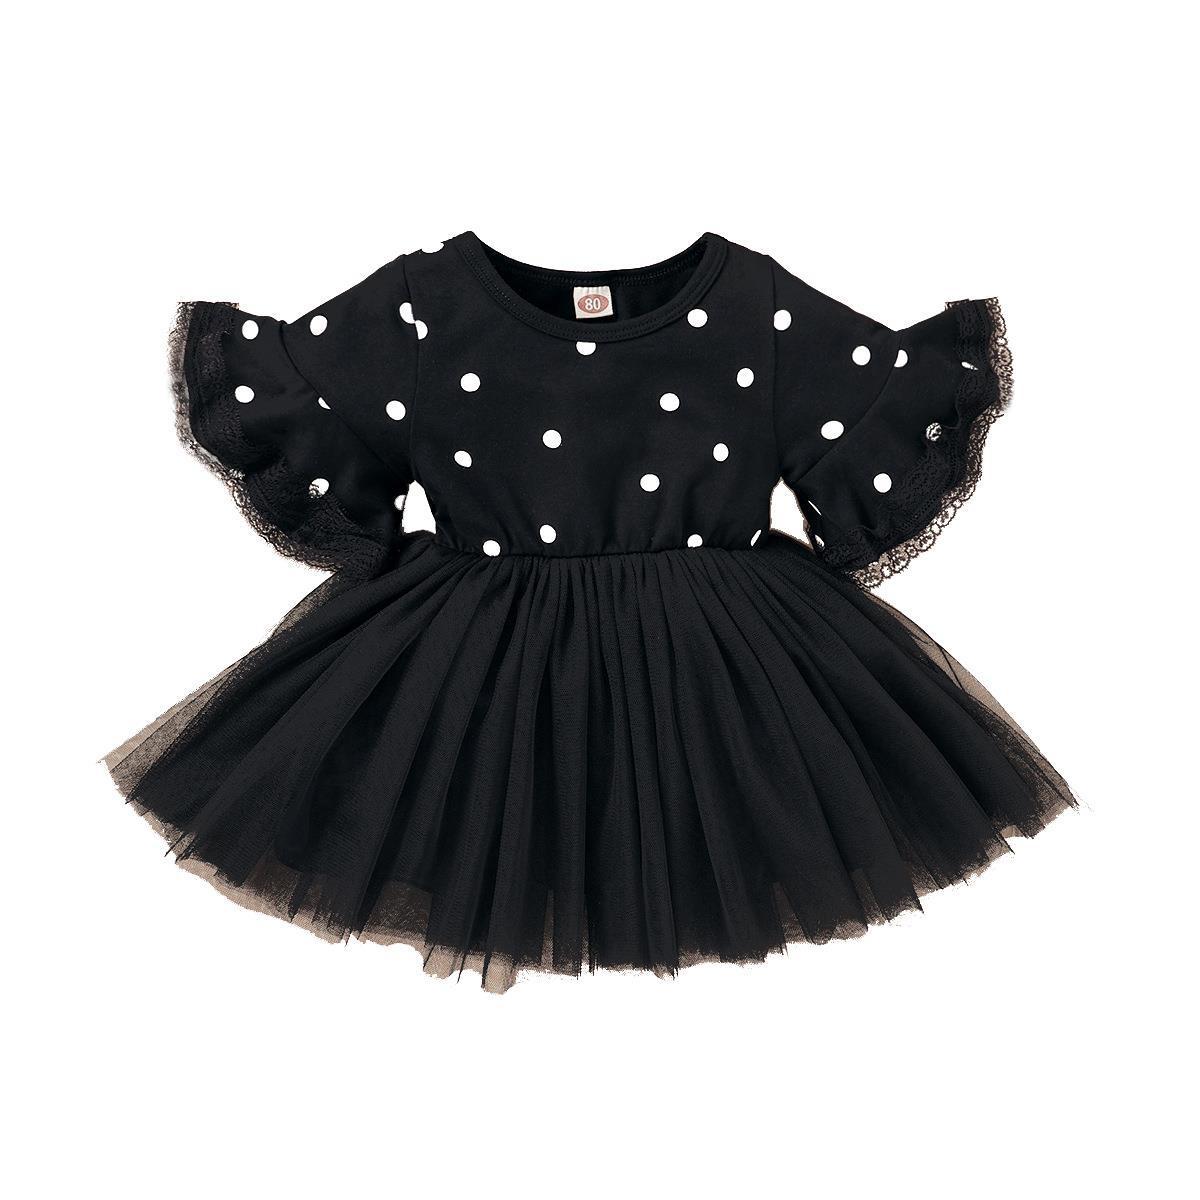 Western Polka Dot Bouffant Net Gauze Skirt Female Baby Fashion